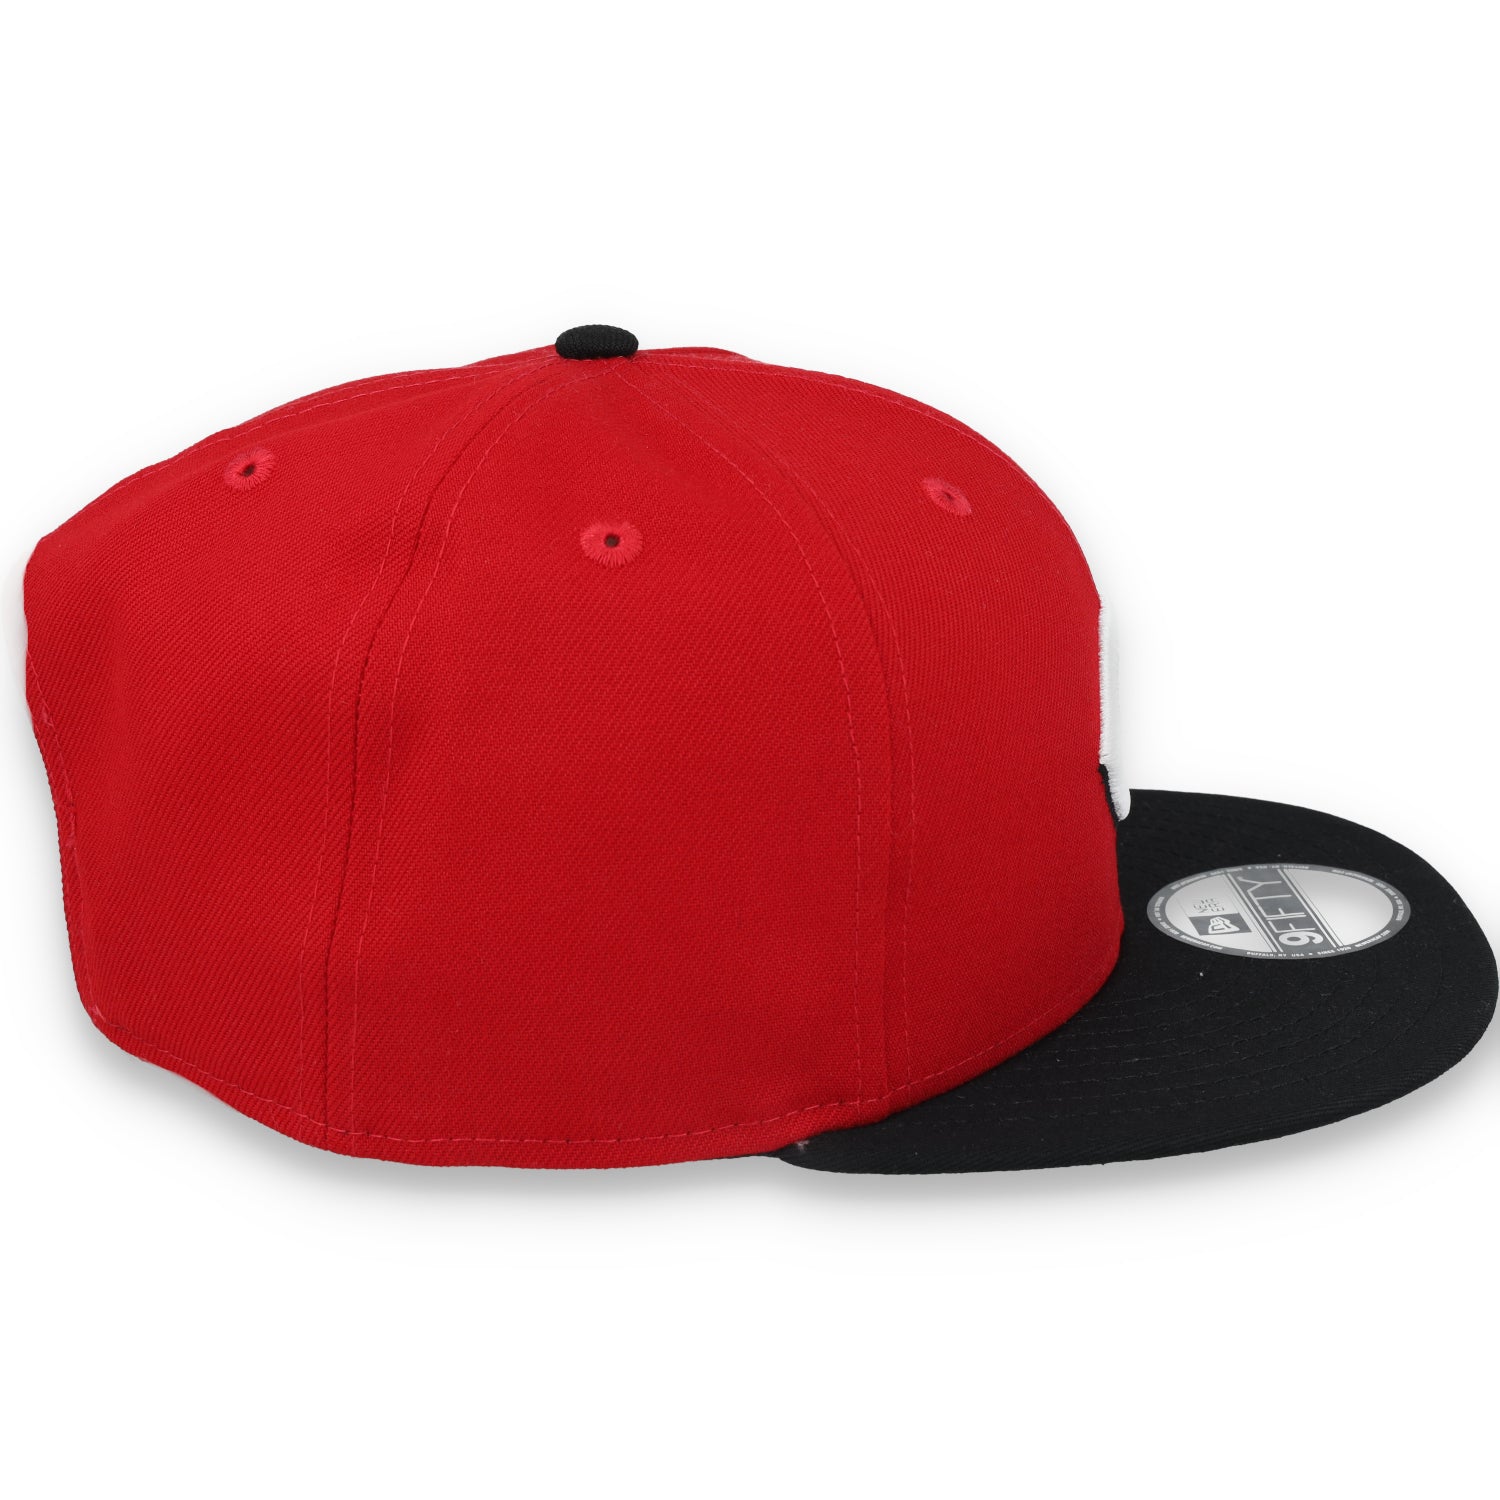 New Era Cincinnati Reds On Field Alternative 9FIFTY Snapback hat